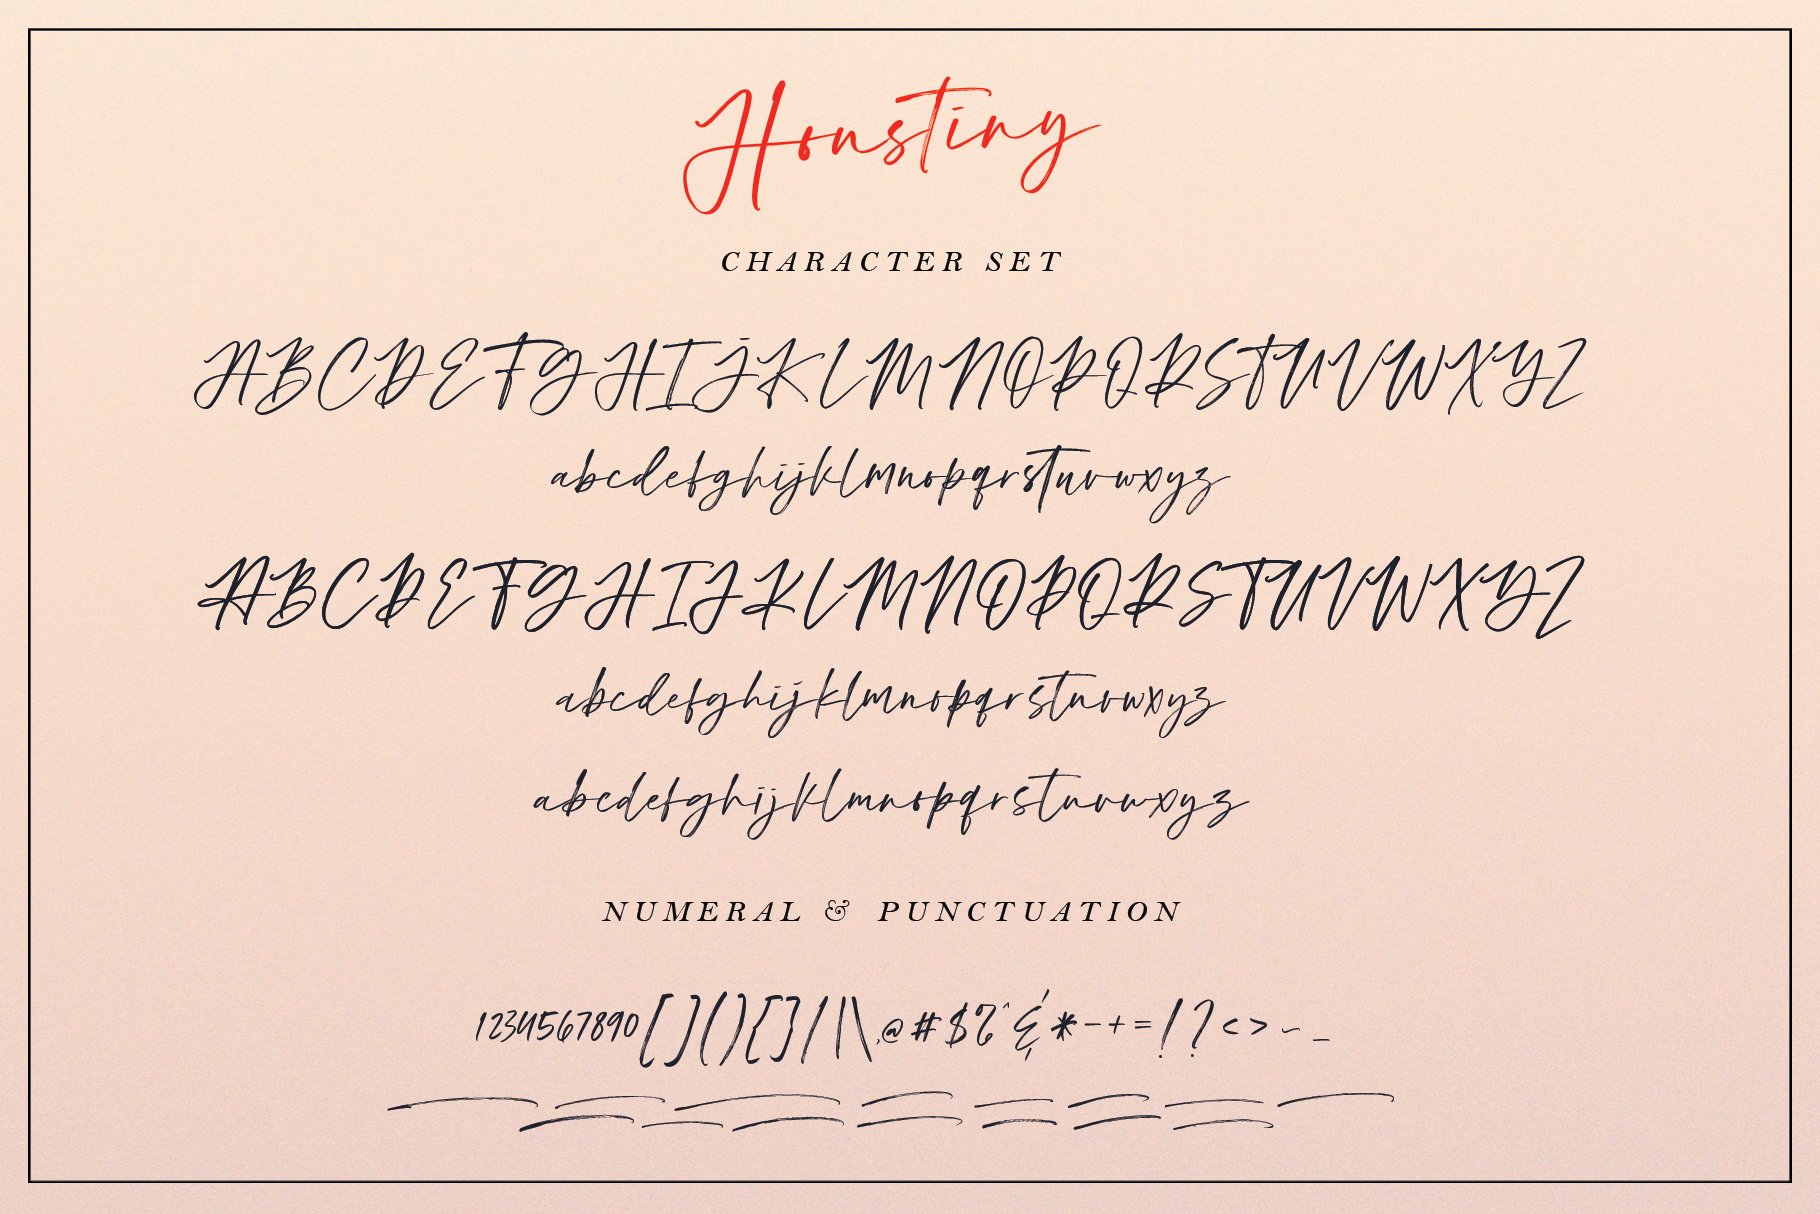 Houstiny - Handwritten Font